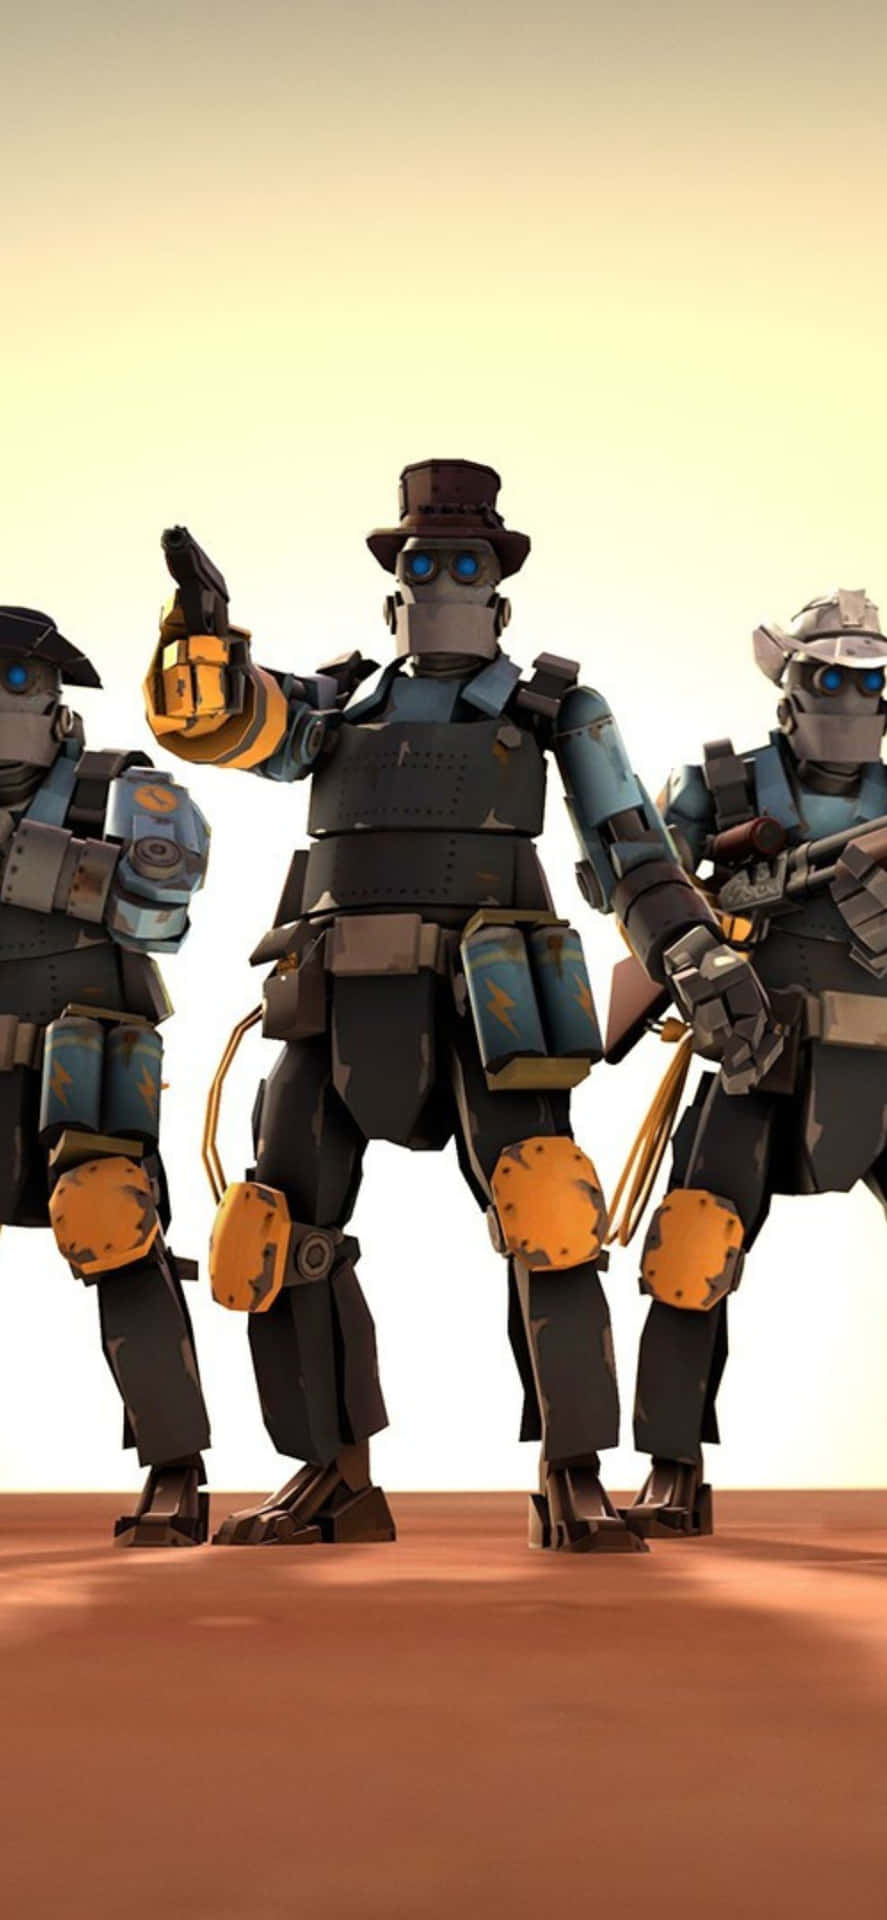 Hintergrundbildfür Iphone Xs - Team Fortress 2 Cowboy Roboter